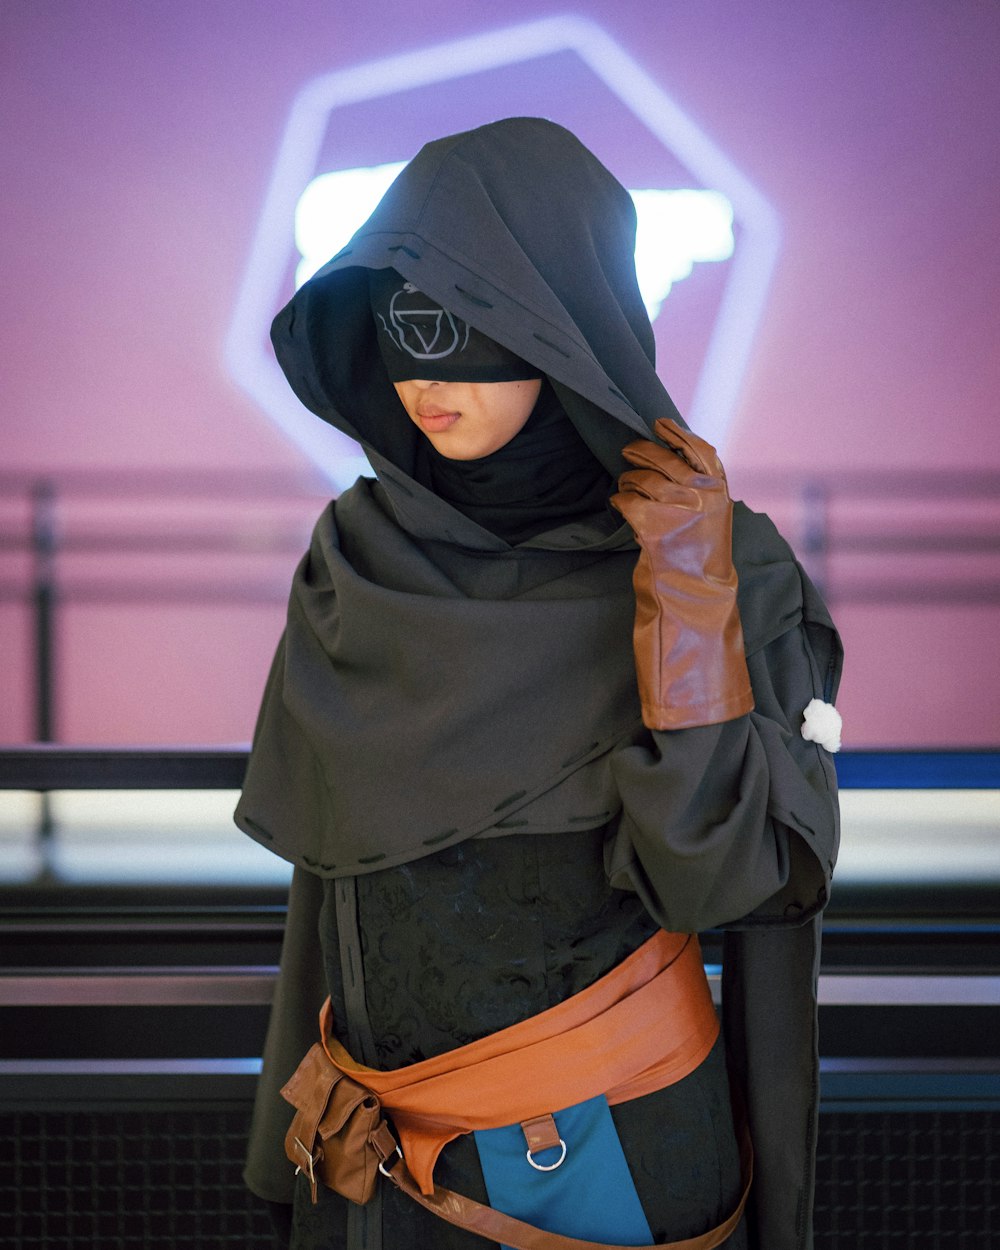 woman wearing black hijab headscarf with mask standing